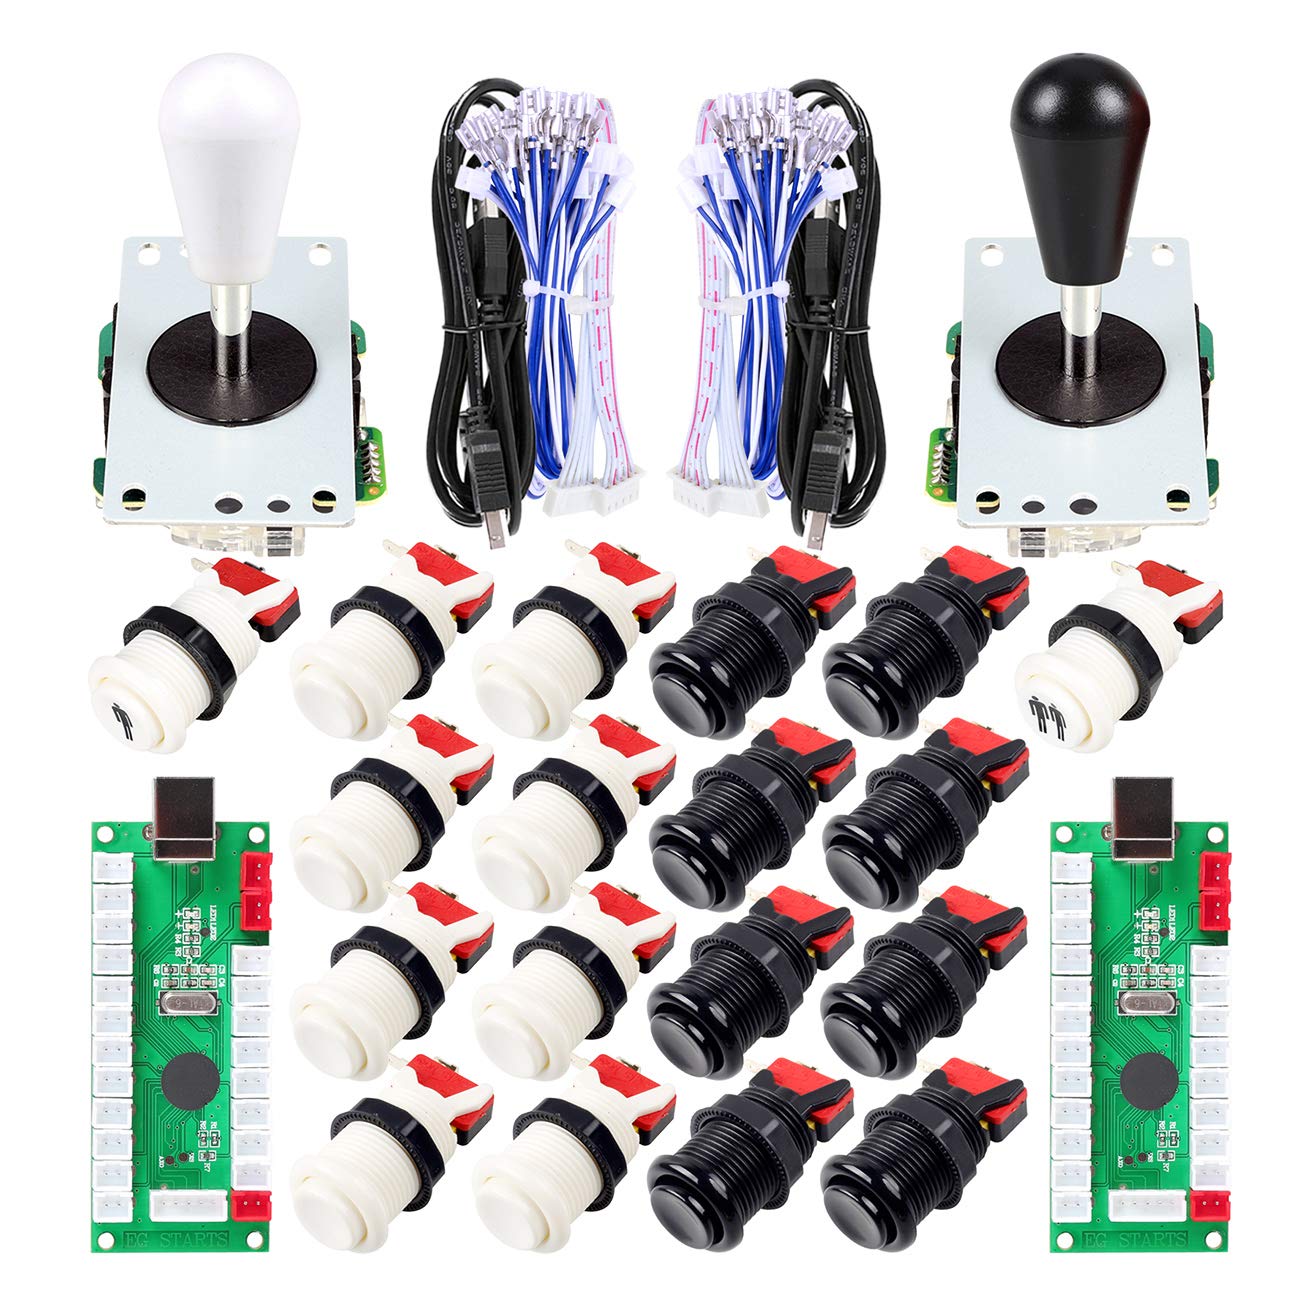 EG STARTS 2 Spieler Arcade Joystick DIY-Teile 2X USB Encoder + 2X Ellipse Oval Joystick Griff + 18x American Style Arcade Buttons für PC, MAME, Raspberry Pi, Windows-System (Schwarz & weiß)